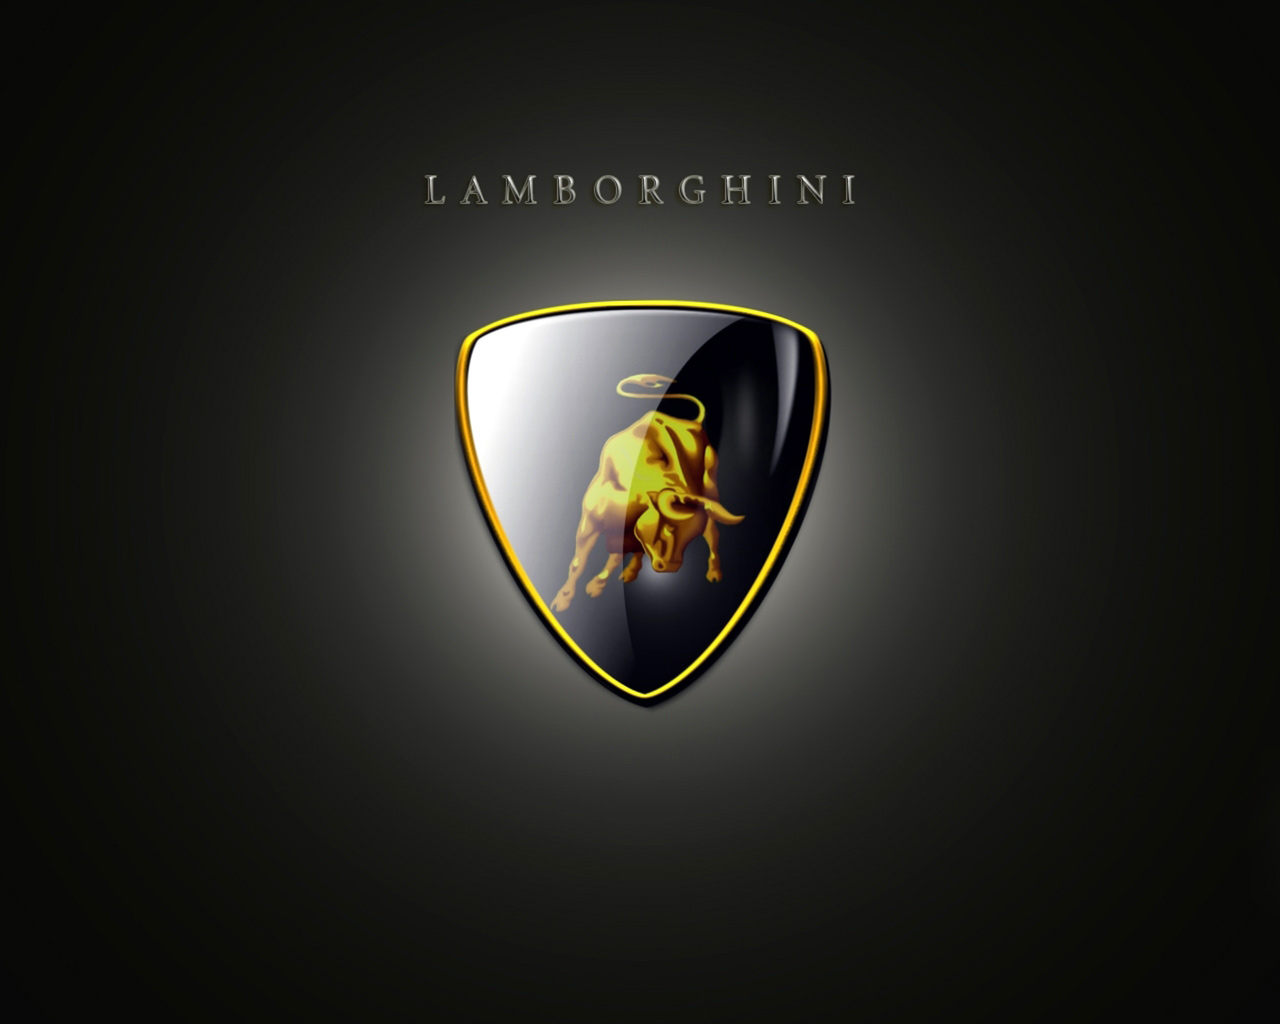 https://blogger.googleusercontent.com/img/b/R29vZ2xl/AVvXsEh2c0eu7NXbmSYBeuioi0KnEjgllIURrEz7lkNZM3CRDBTVOKsJZBBCFZT6brqfEFT2TMkHPc5au9bkODbI7Rw3vKXB4iDLRhOClR4c_oUq-nCy23oTt6YMpZJXOBDHoXGRIVs8qXy5rMnG/s1600/Lamborghini-Log-wallpaper.jpg